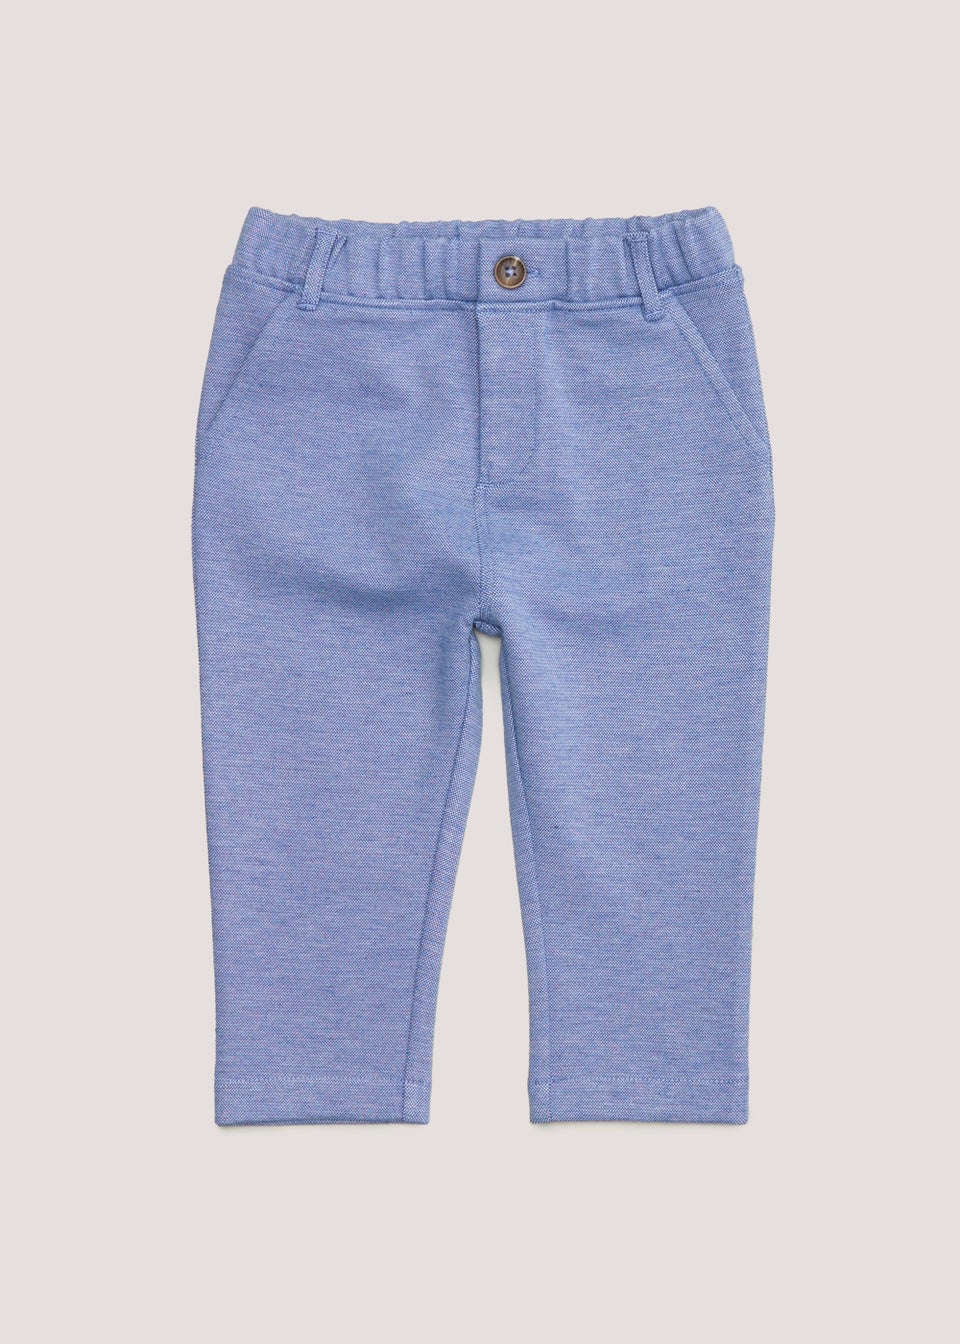 Boys Mini Me Blue Smart Jersey Trousers (9mths-4yrs)